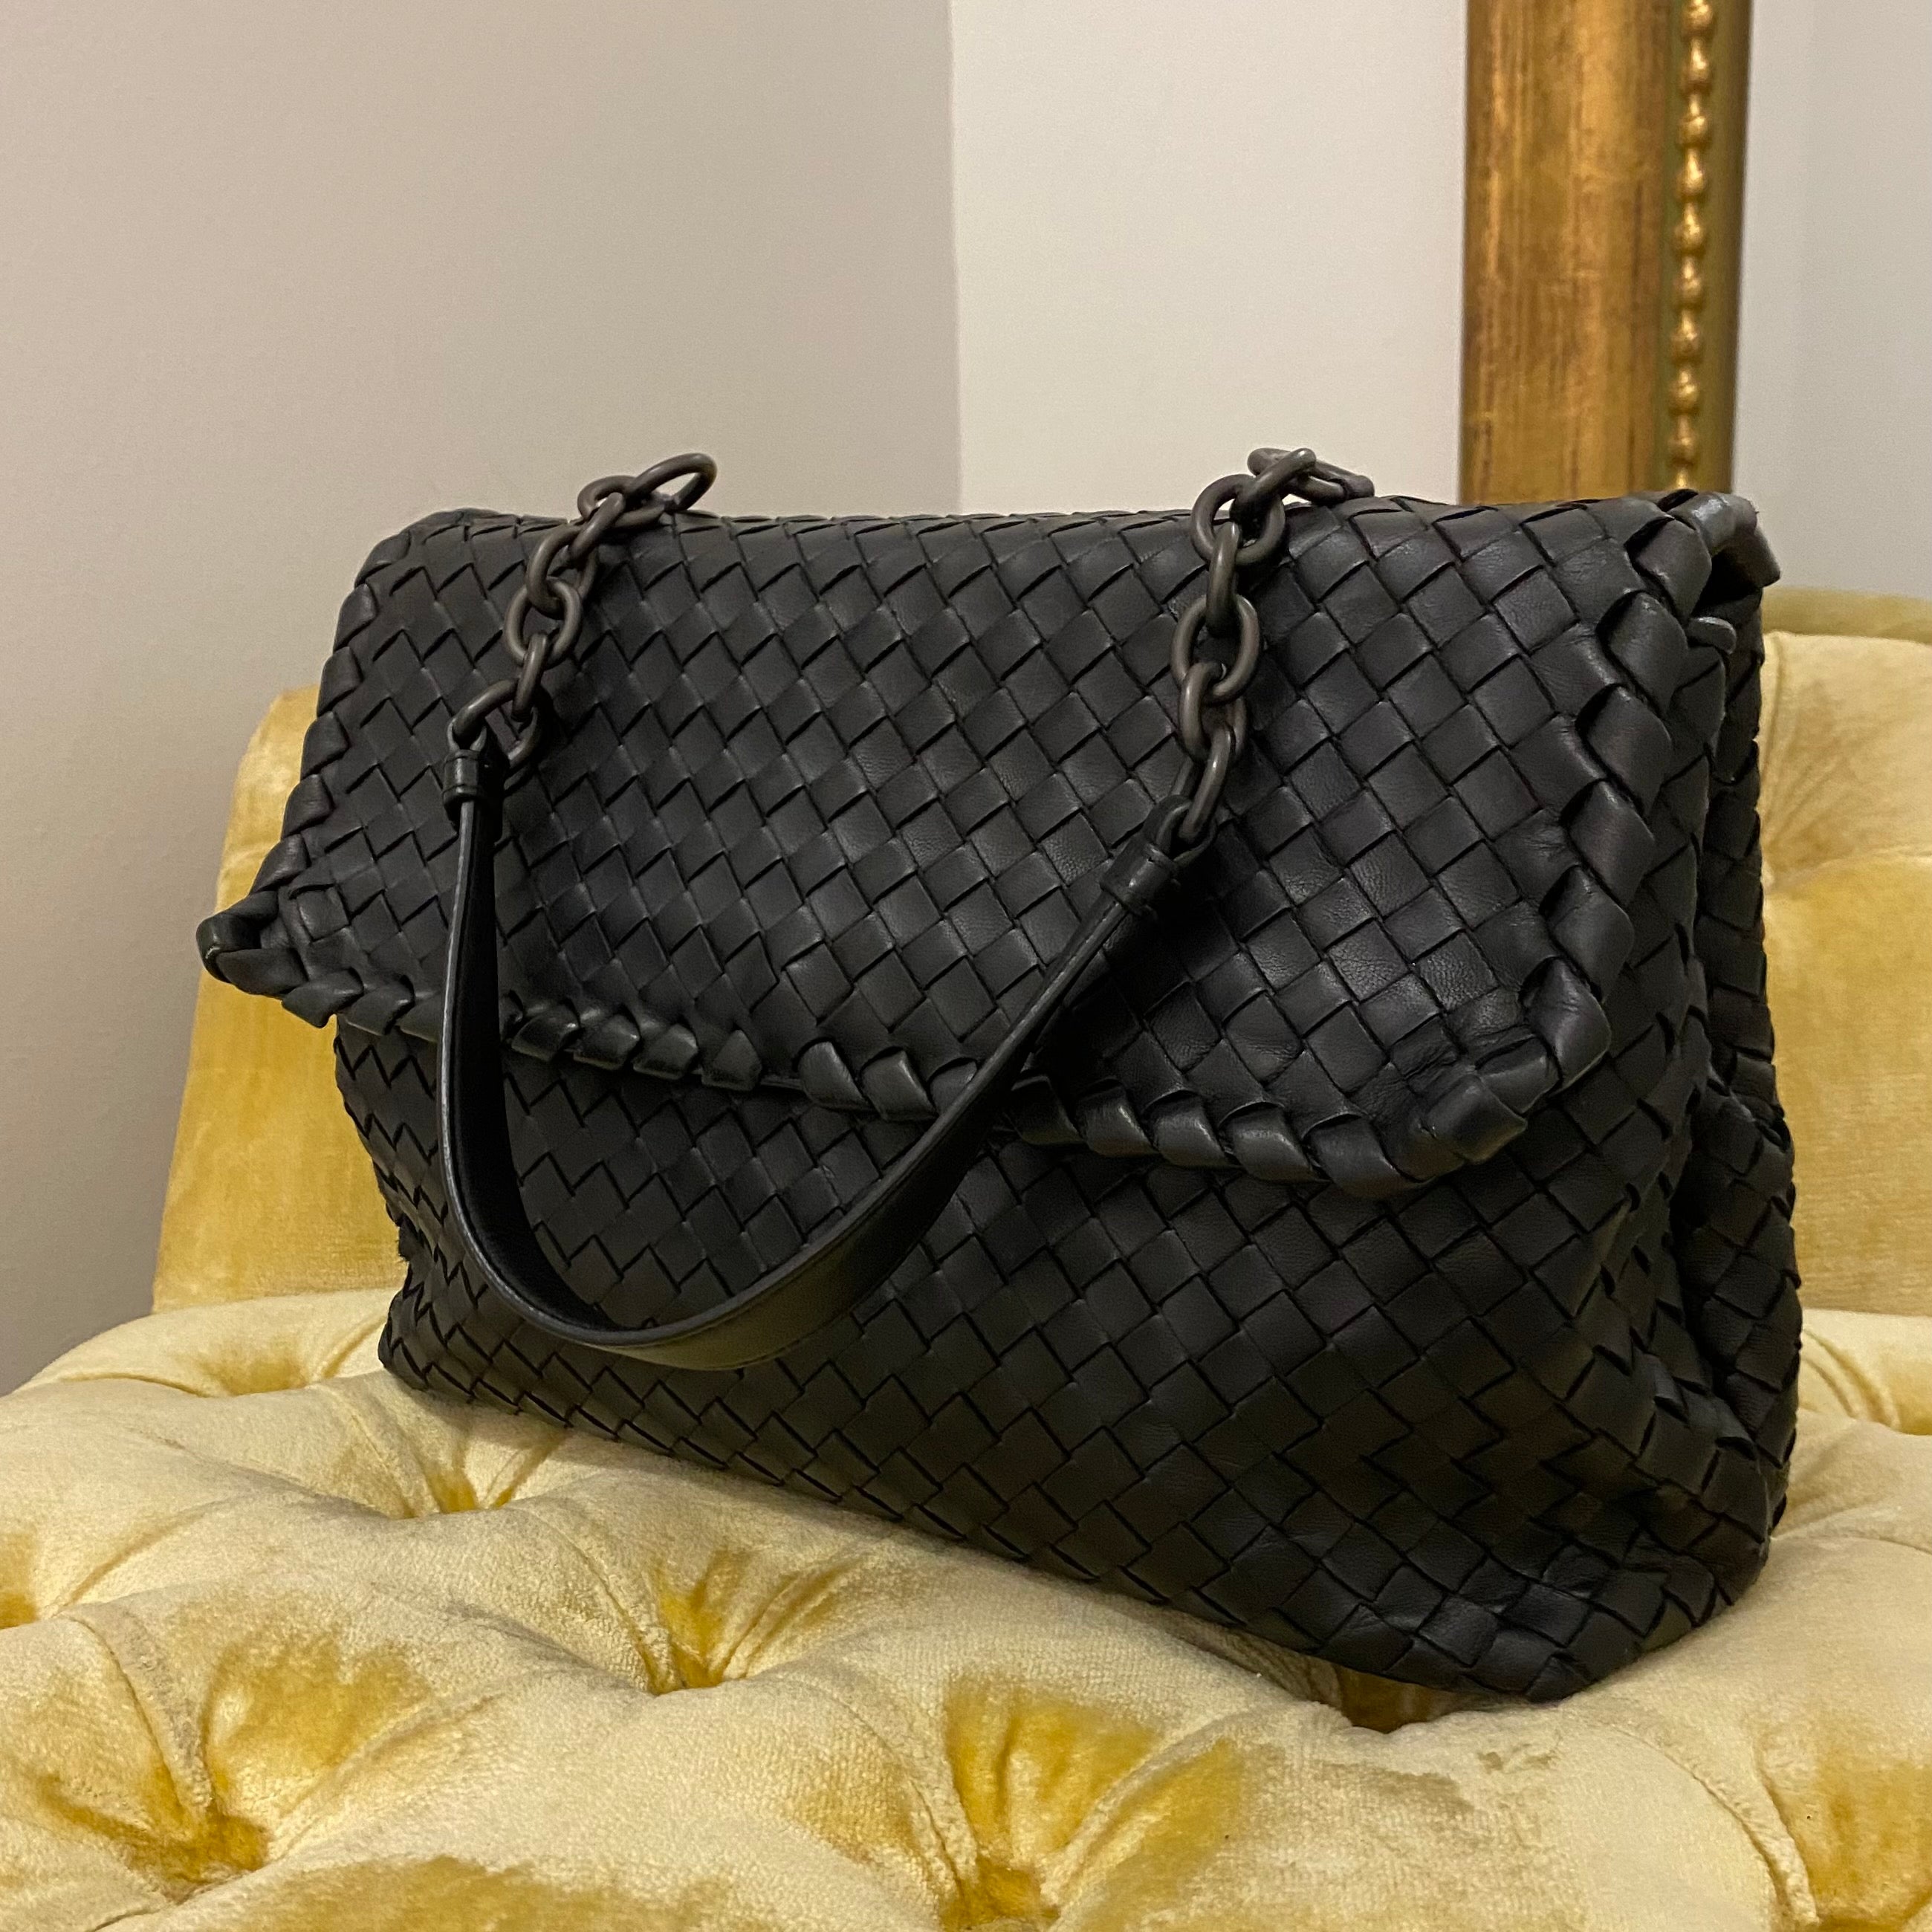 Authentic Bottega Veneta The Point Black Leather Top Handle Bag with Strap